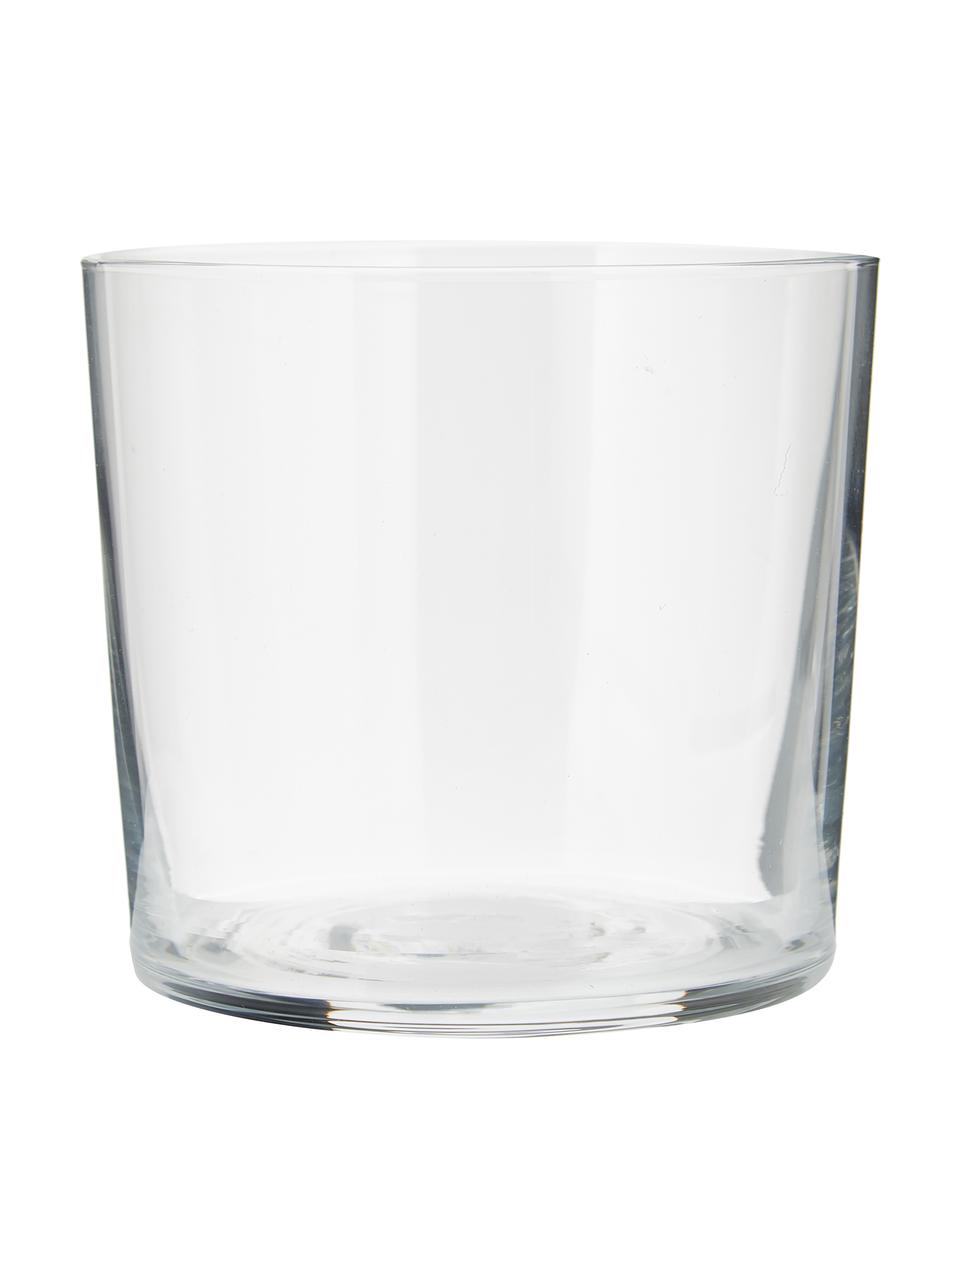 Aqua Morelli Wassergläser Trinkglas formschön edel 6 Stück Bar Neu Gastro 